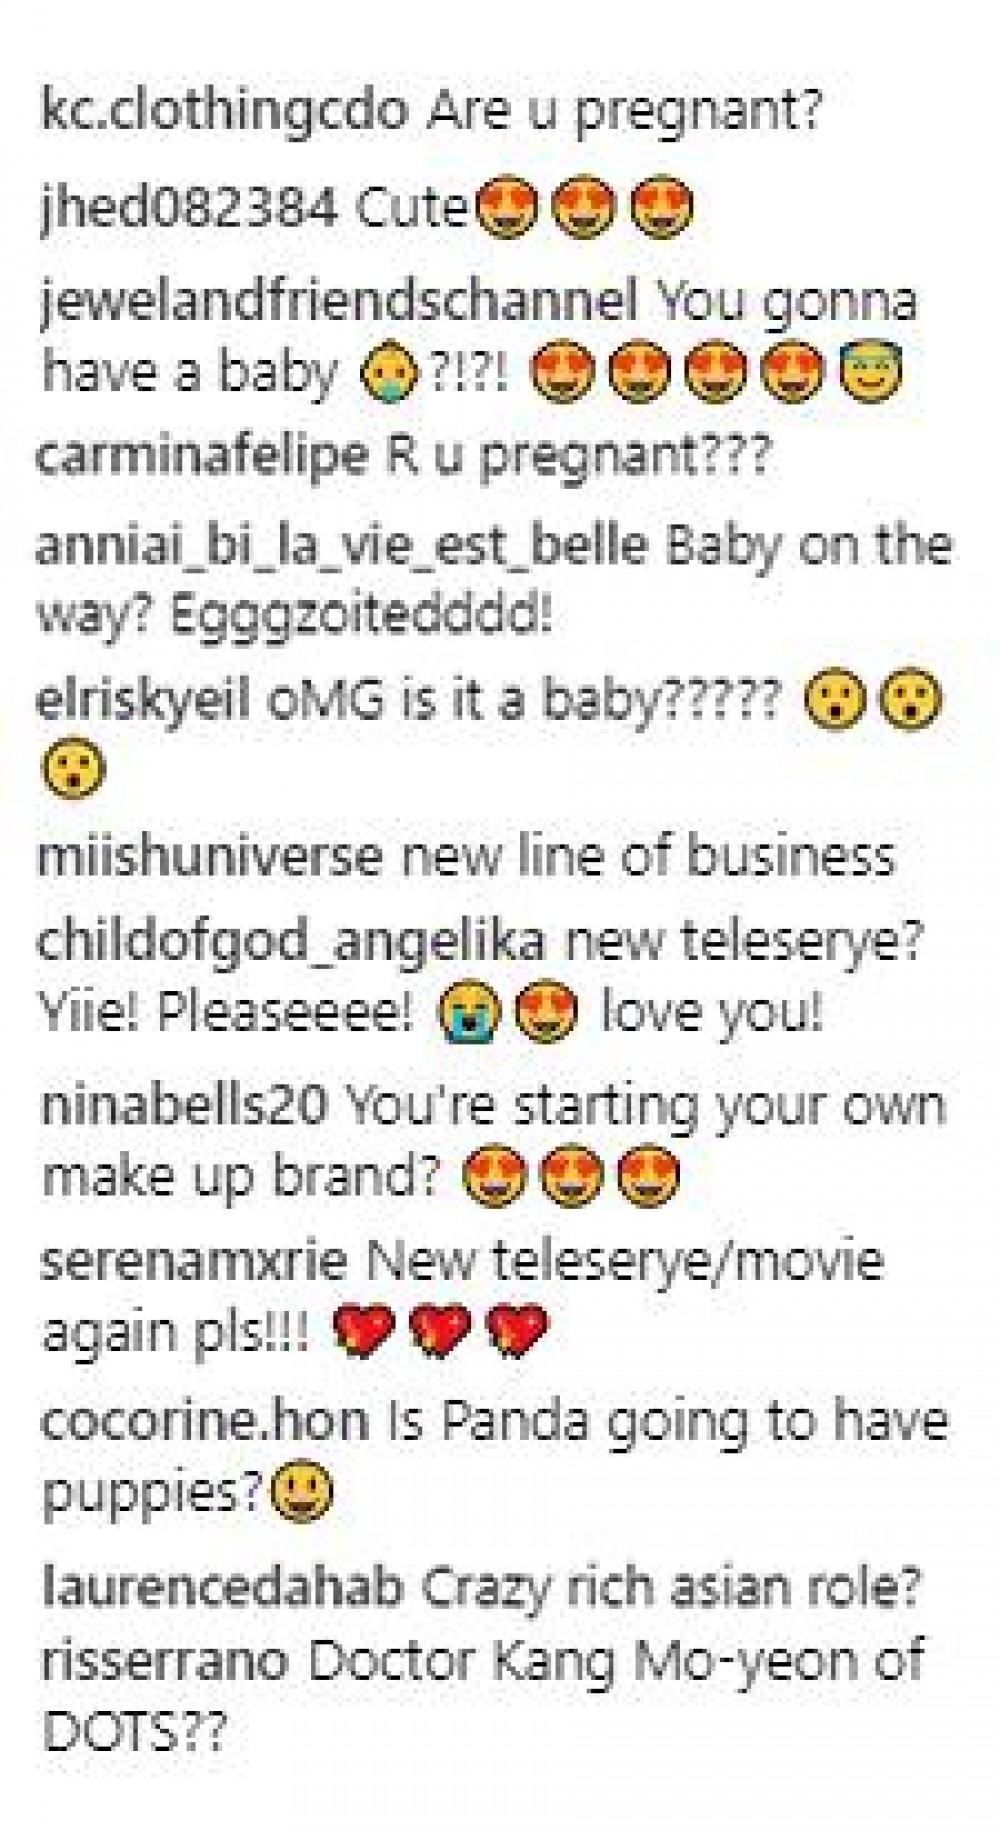 ShowBiz Chika - Heart Evangelista's Instagram post about a secret sparks  pregnancy rumors (Instagram - iamhearte).